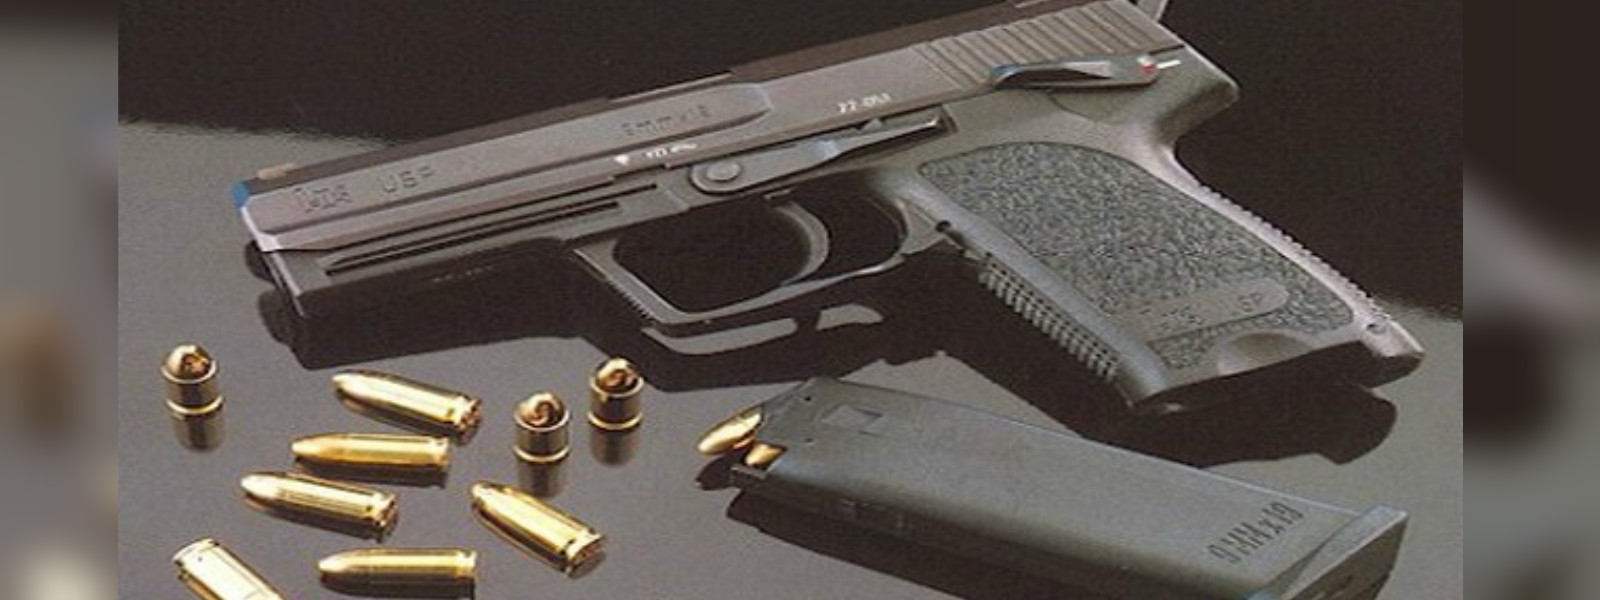 A firearm discovered in Suriyawewa